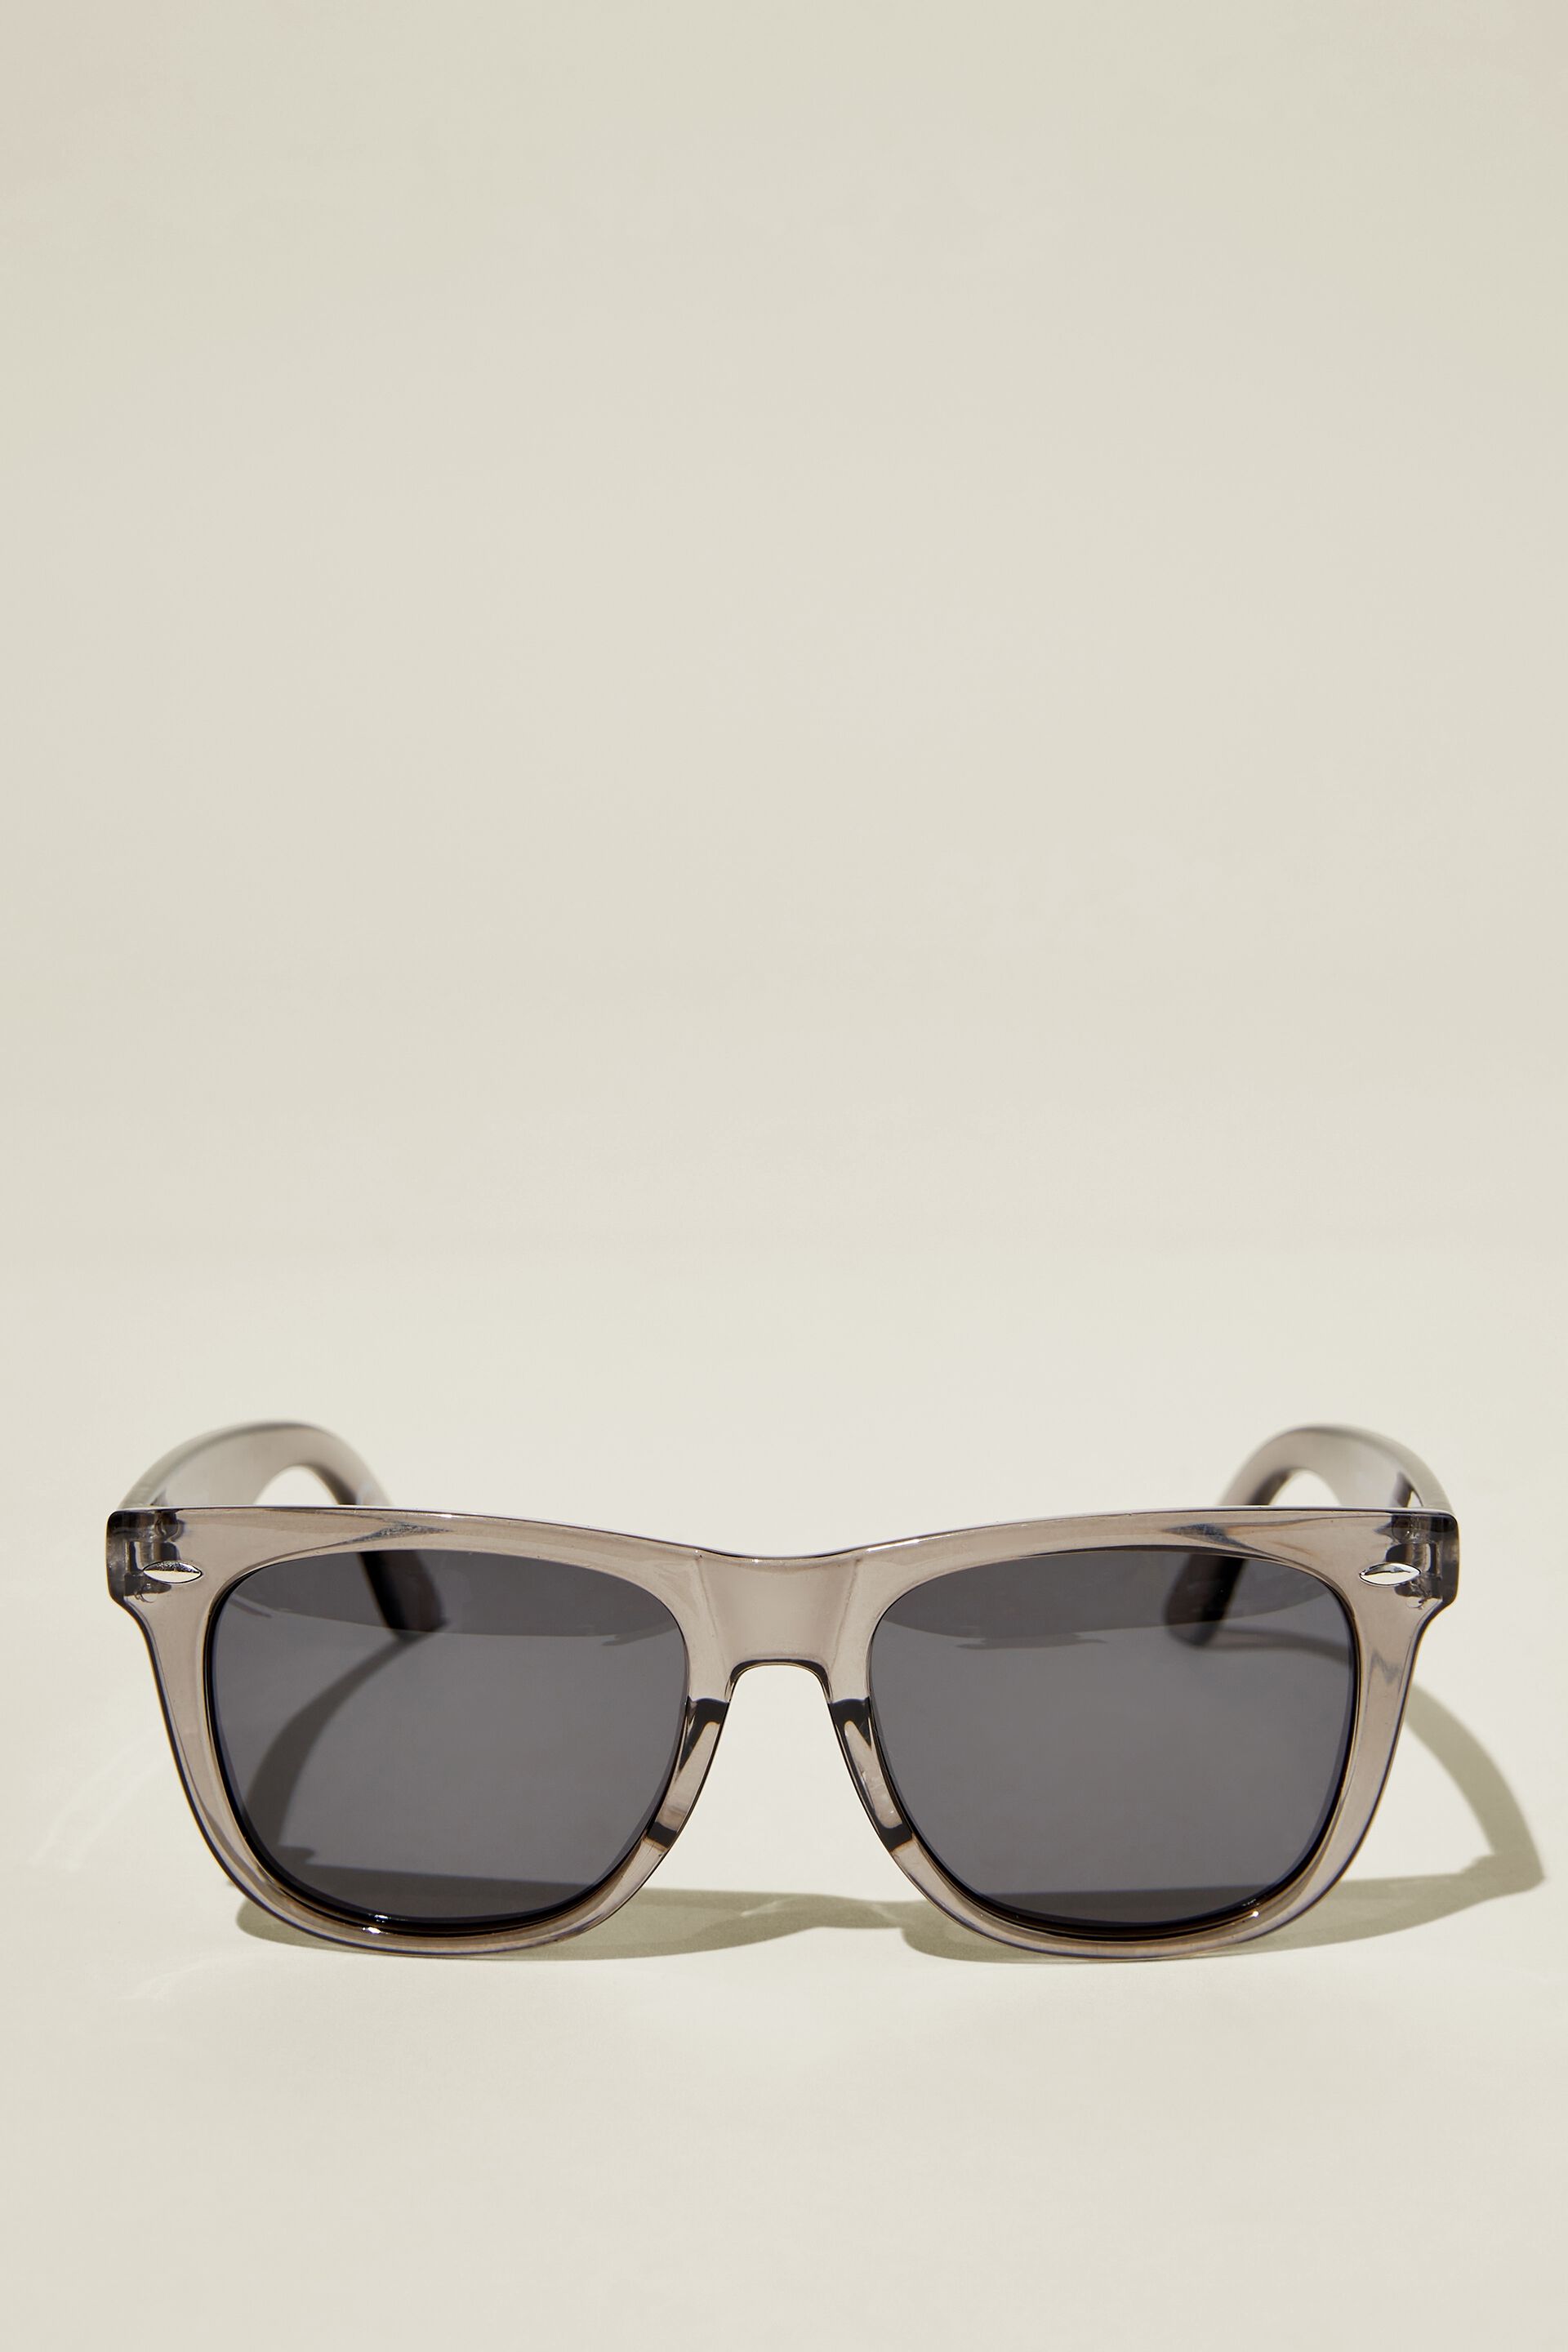 Beckley Polarized Sunglasses